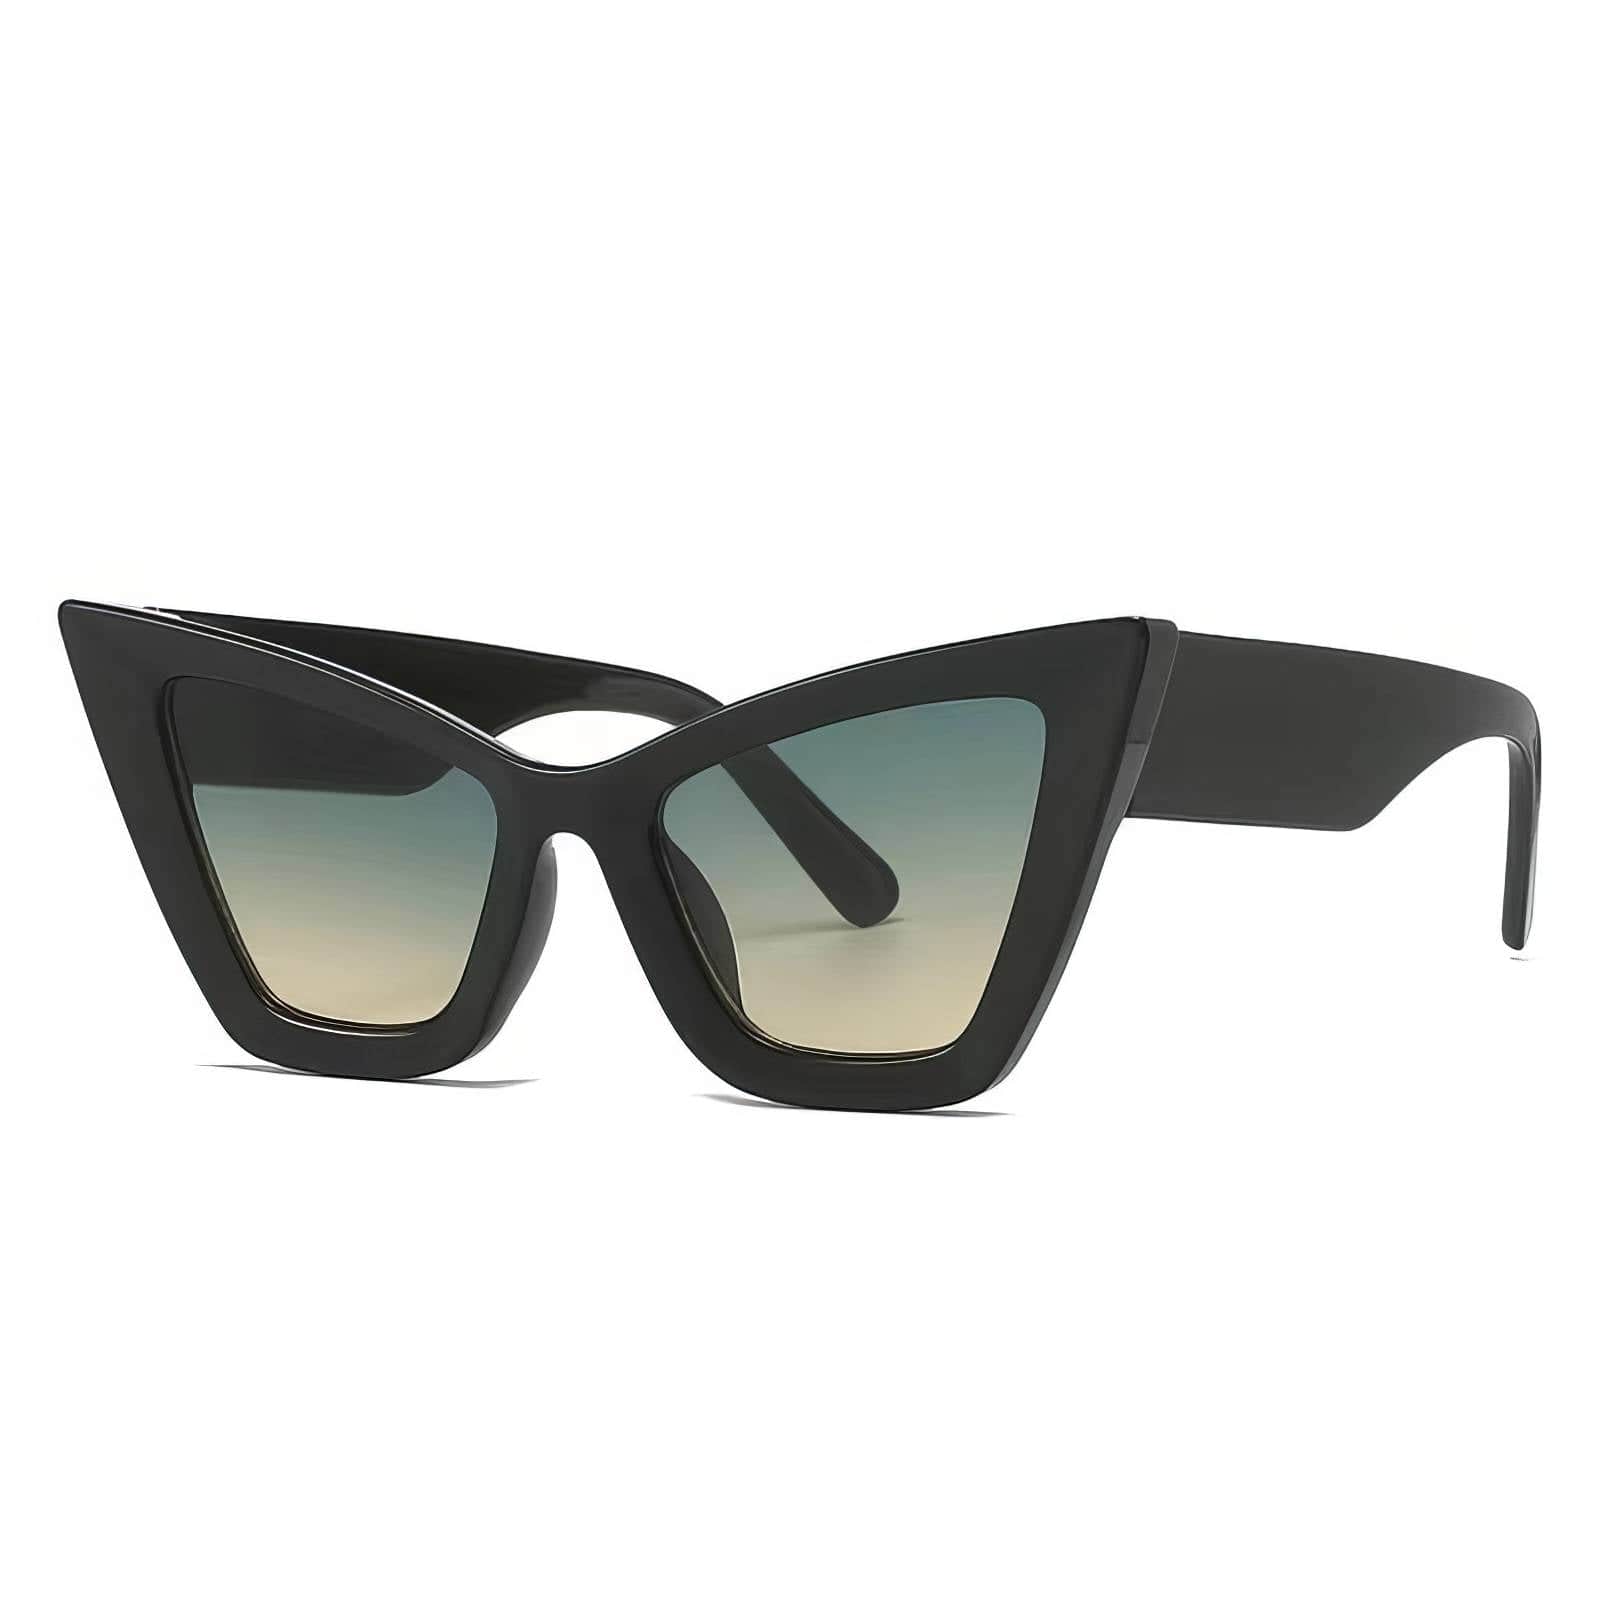 Vintage Large Cat Eye Sunglasses Light Black / Resin